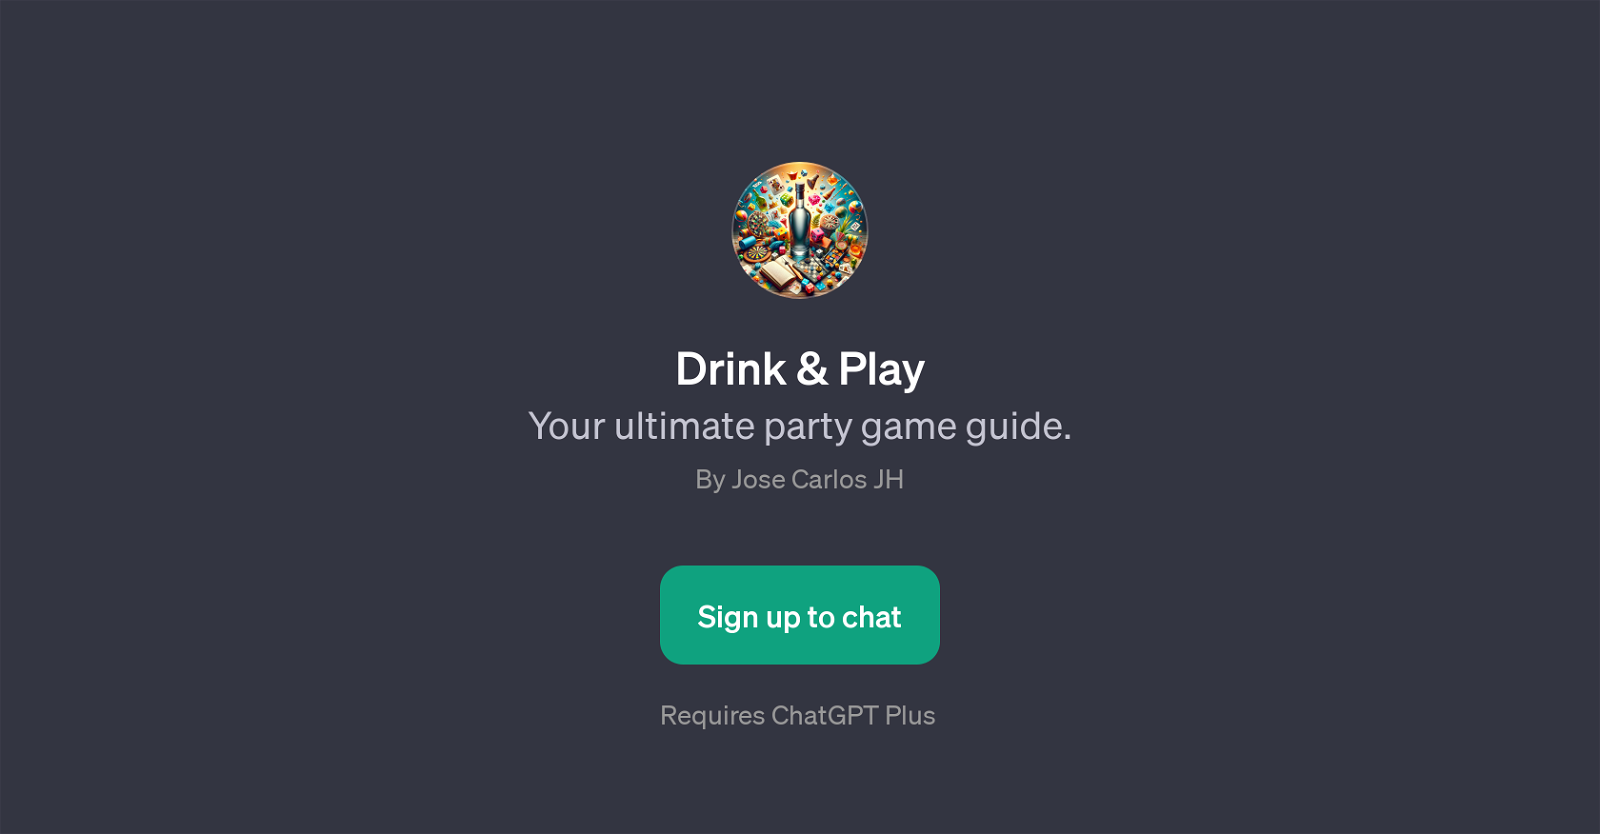 Drink & Play website